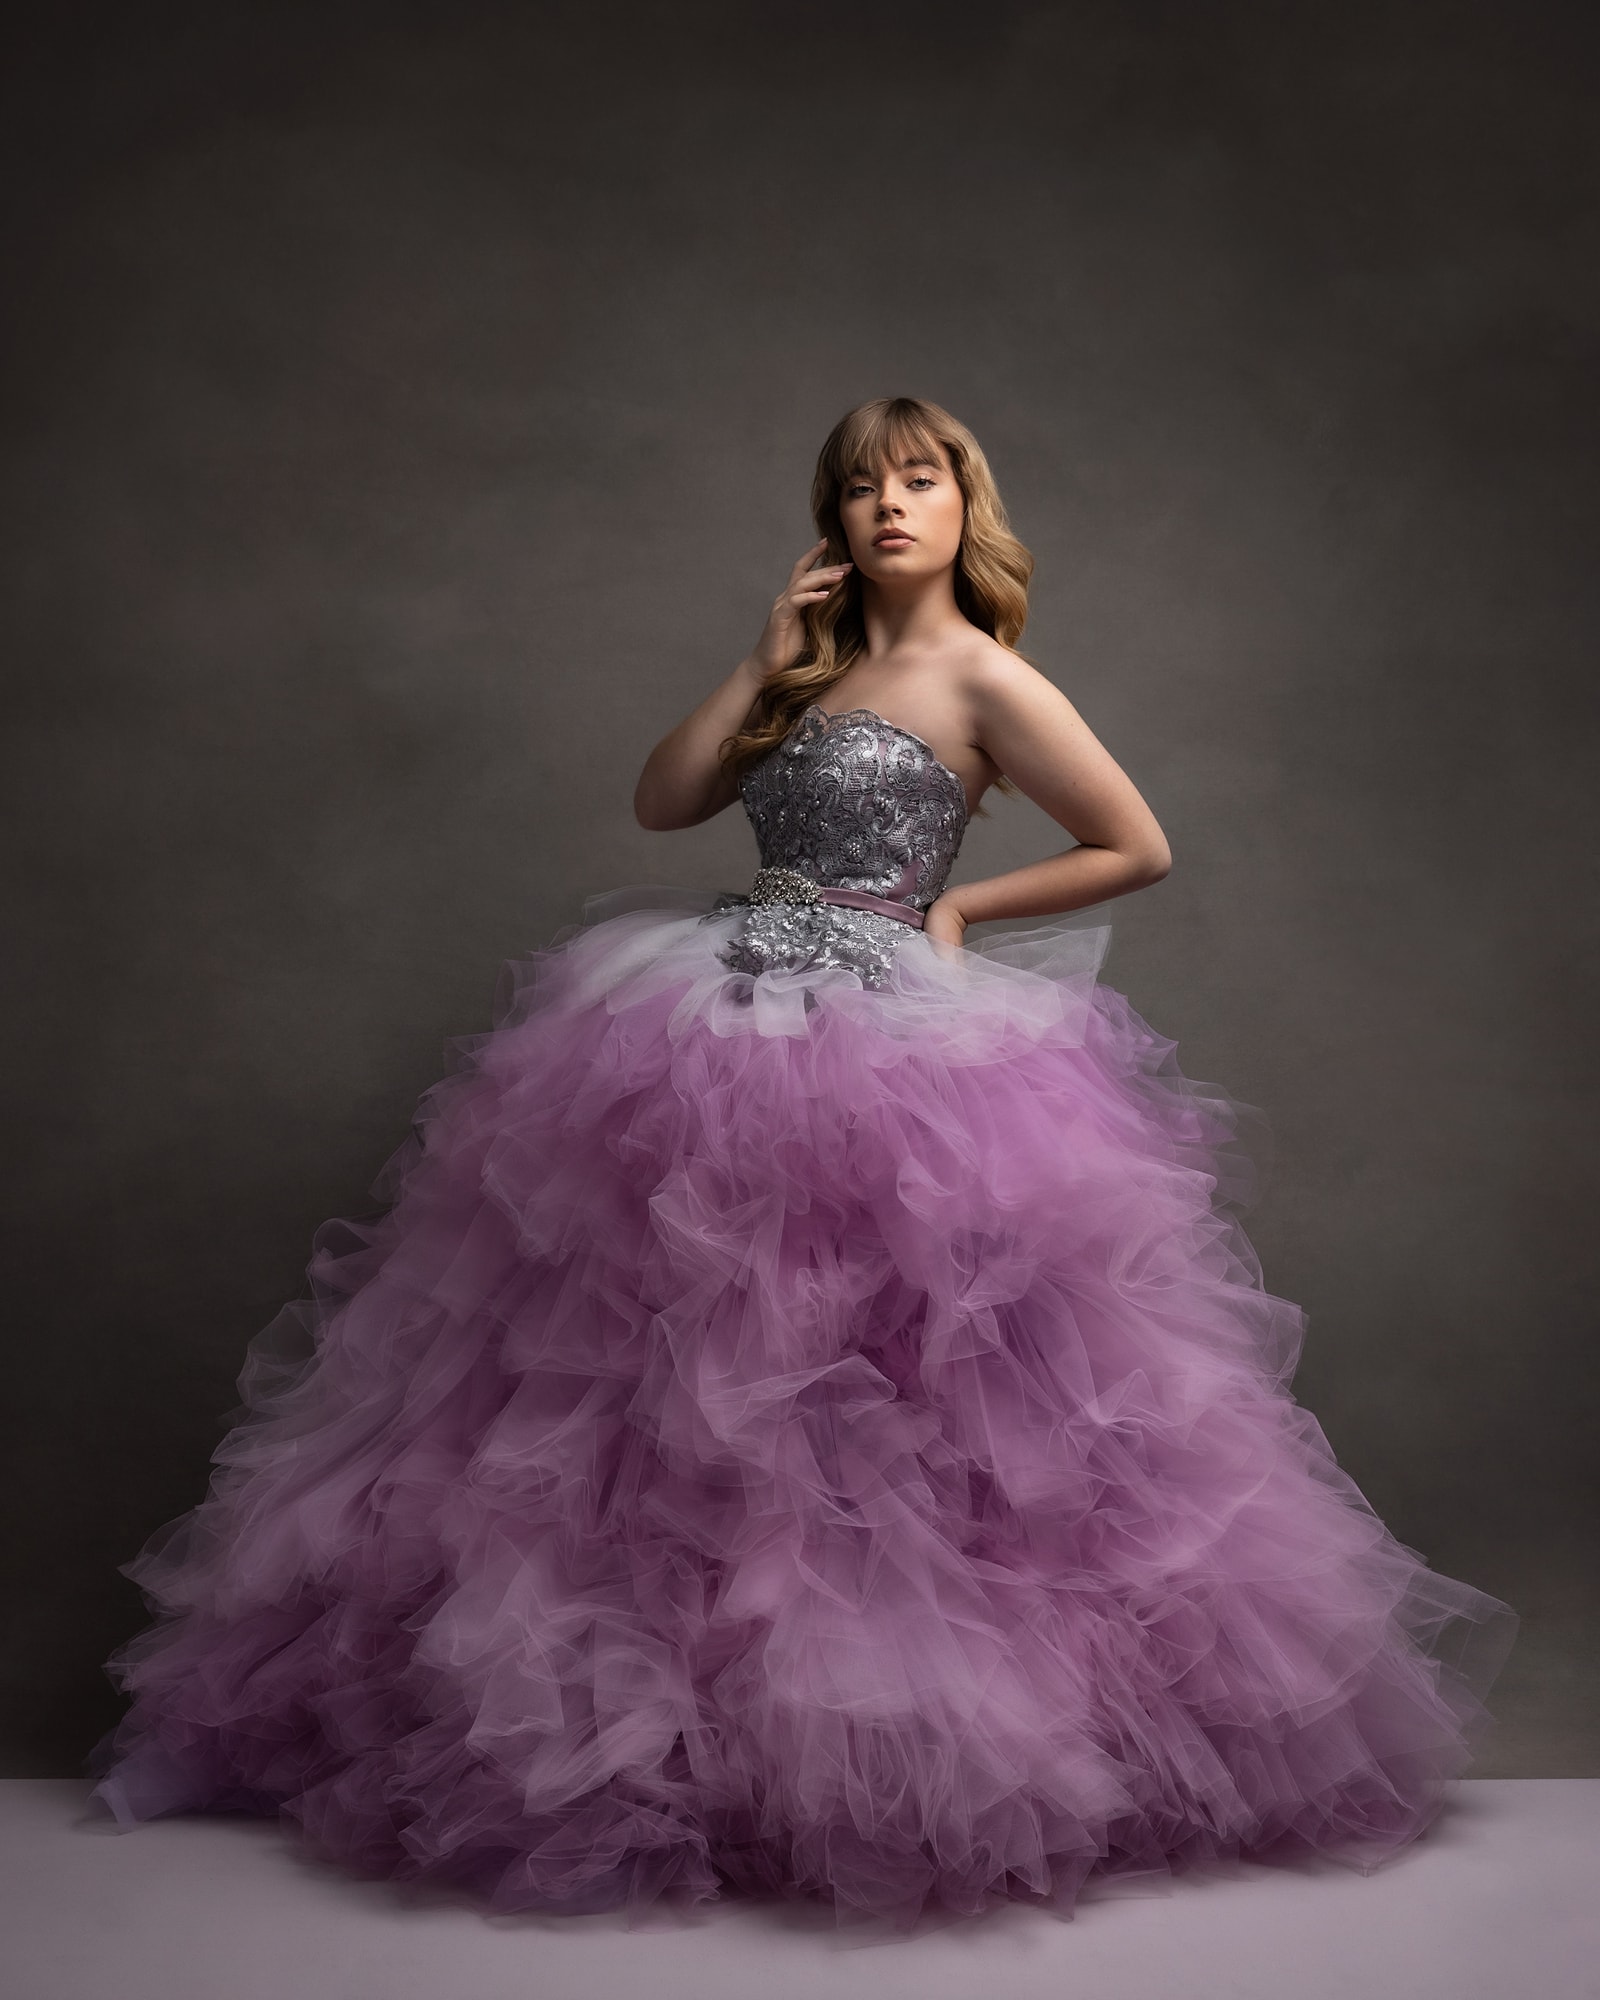 Teenage girl in a purple tulle dress